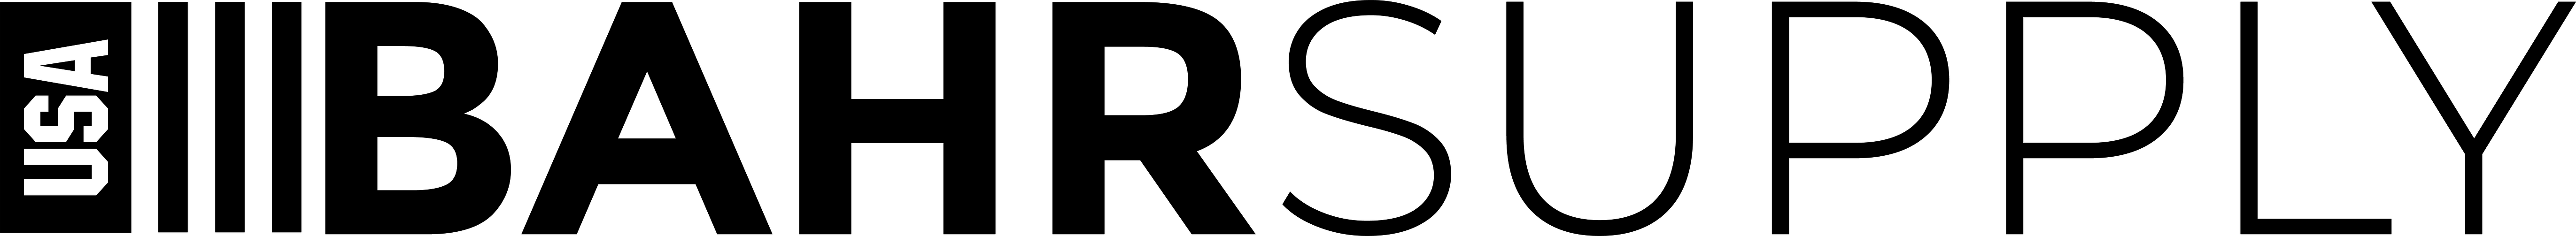 Bahr supply logo in black